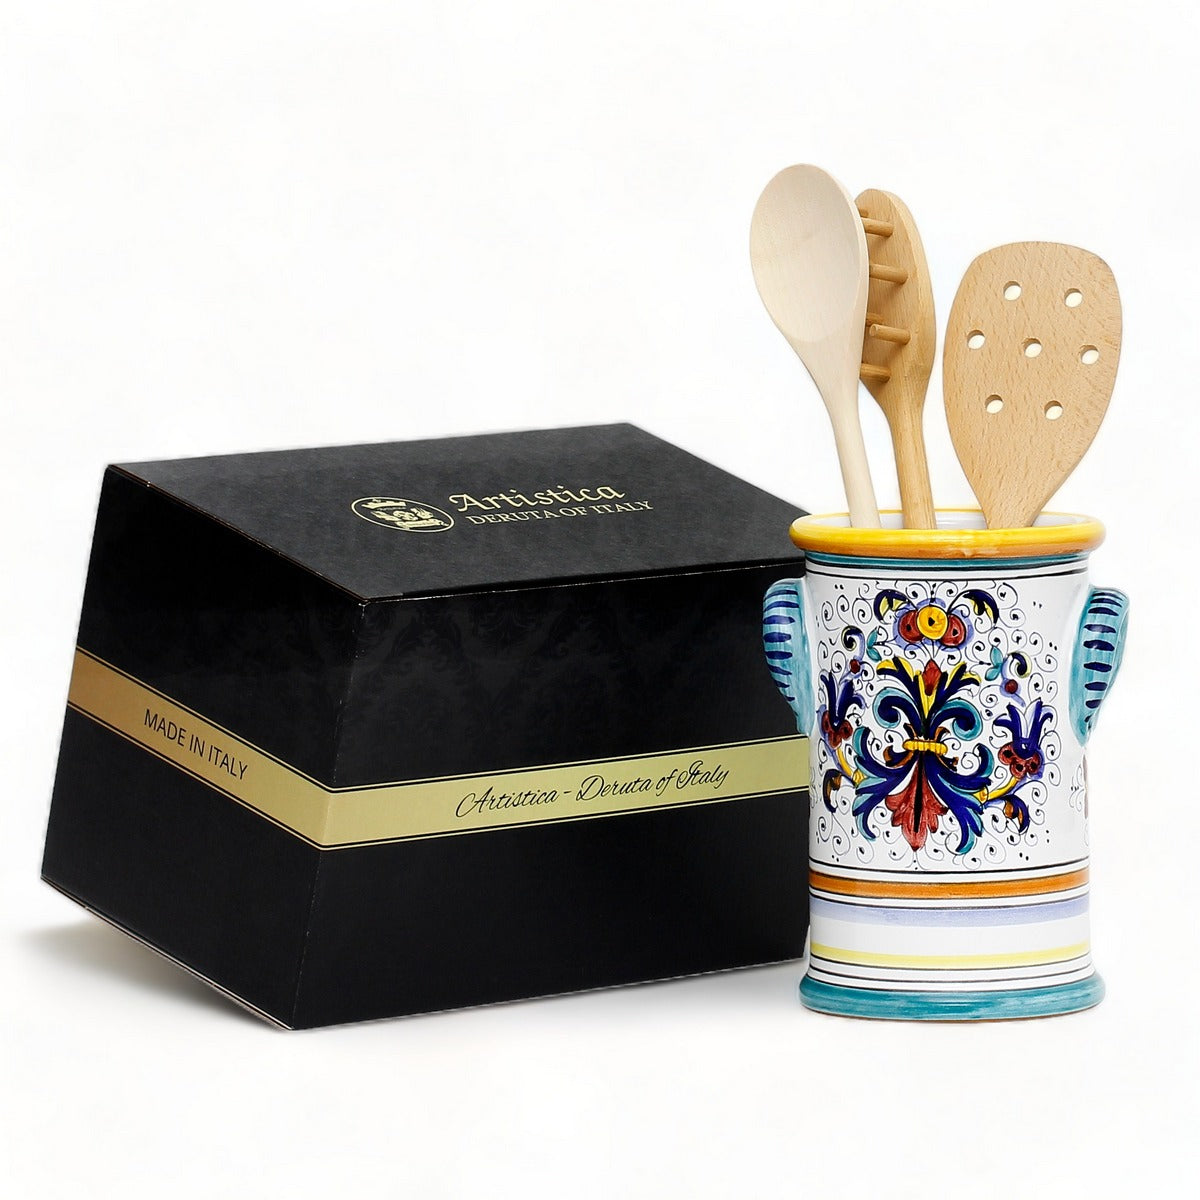 GIFT BOX: With authentic Deruta hand painted ceramic - RICCO DERUTA: UTENSIL HOLDER